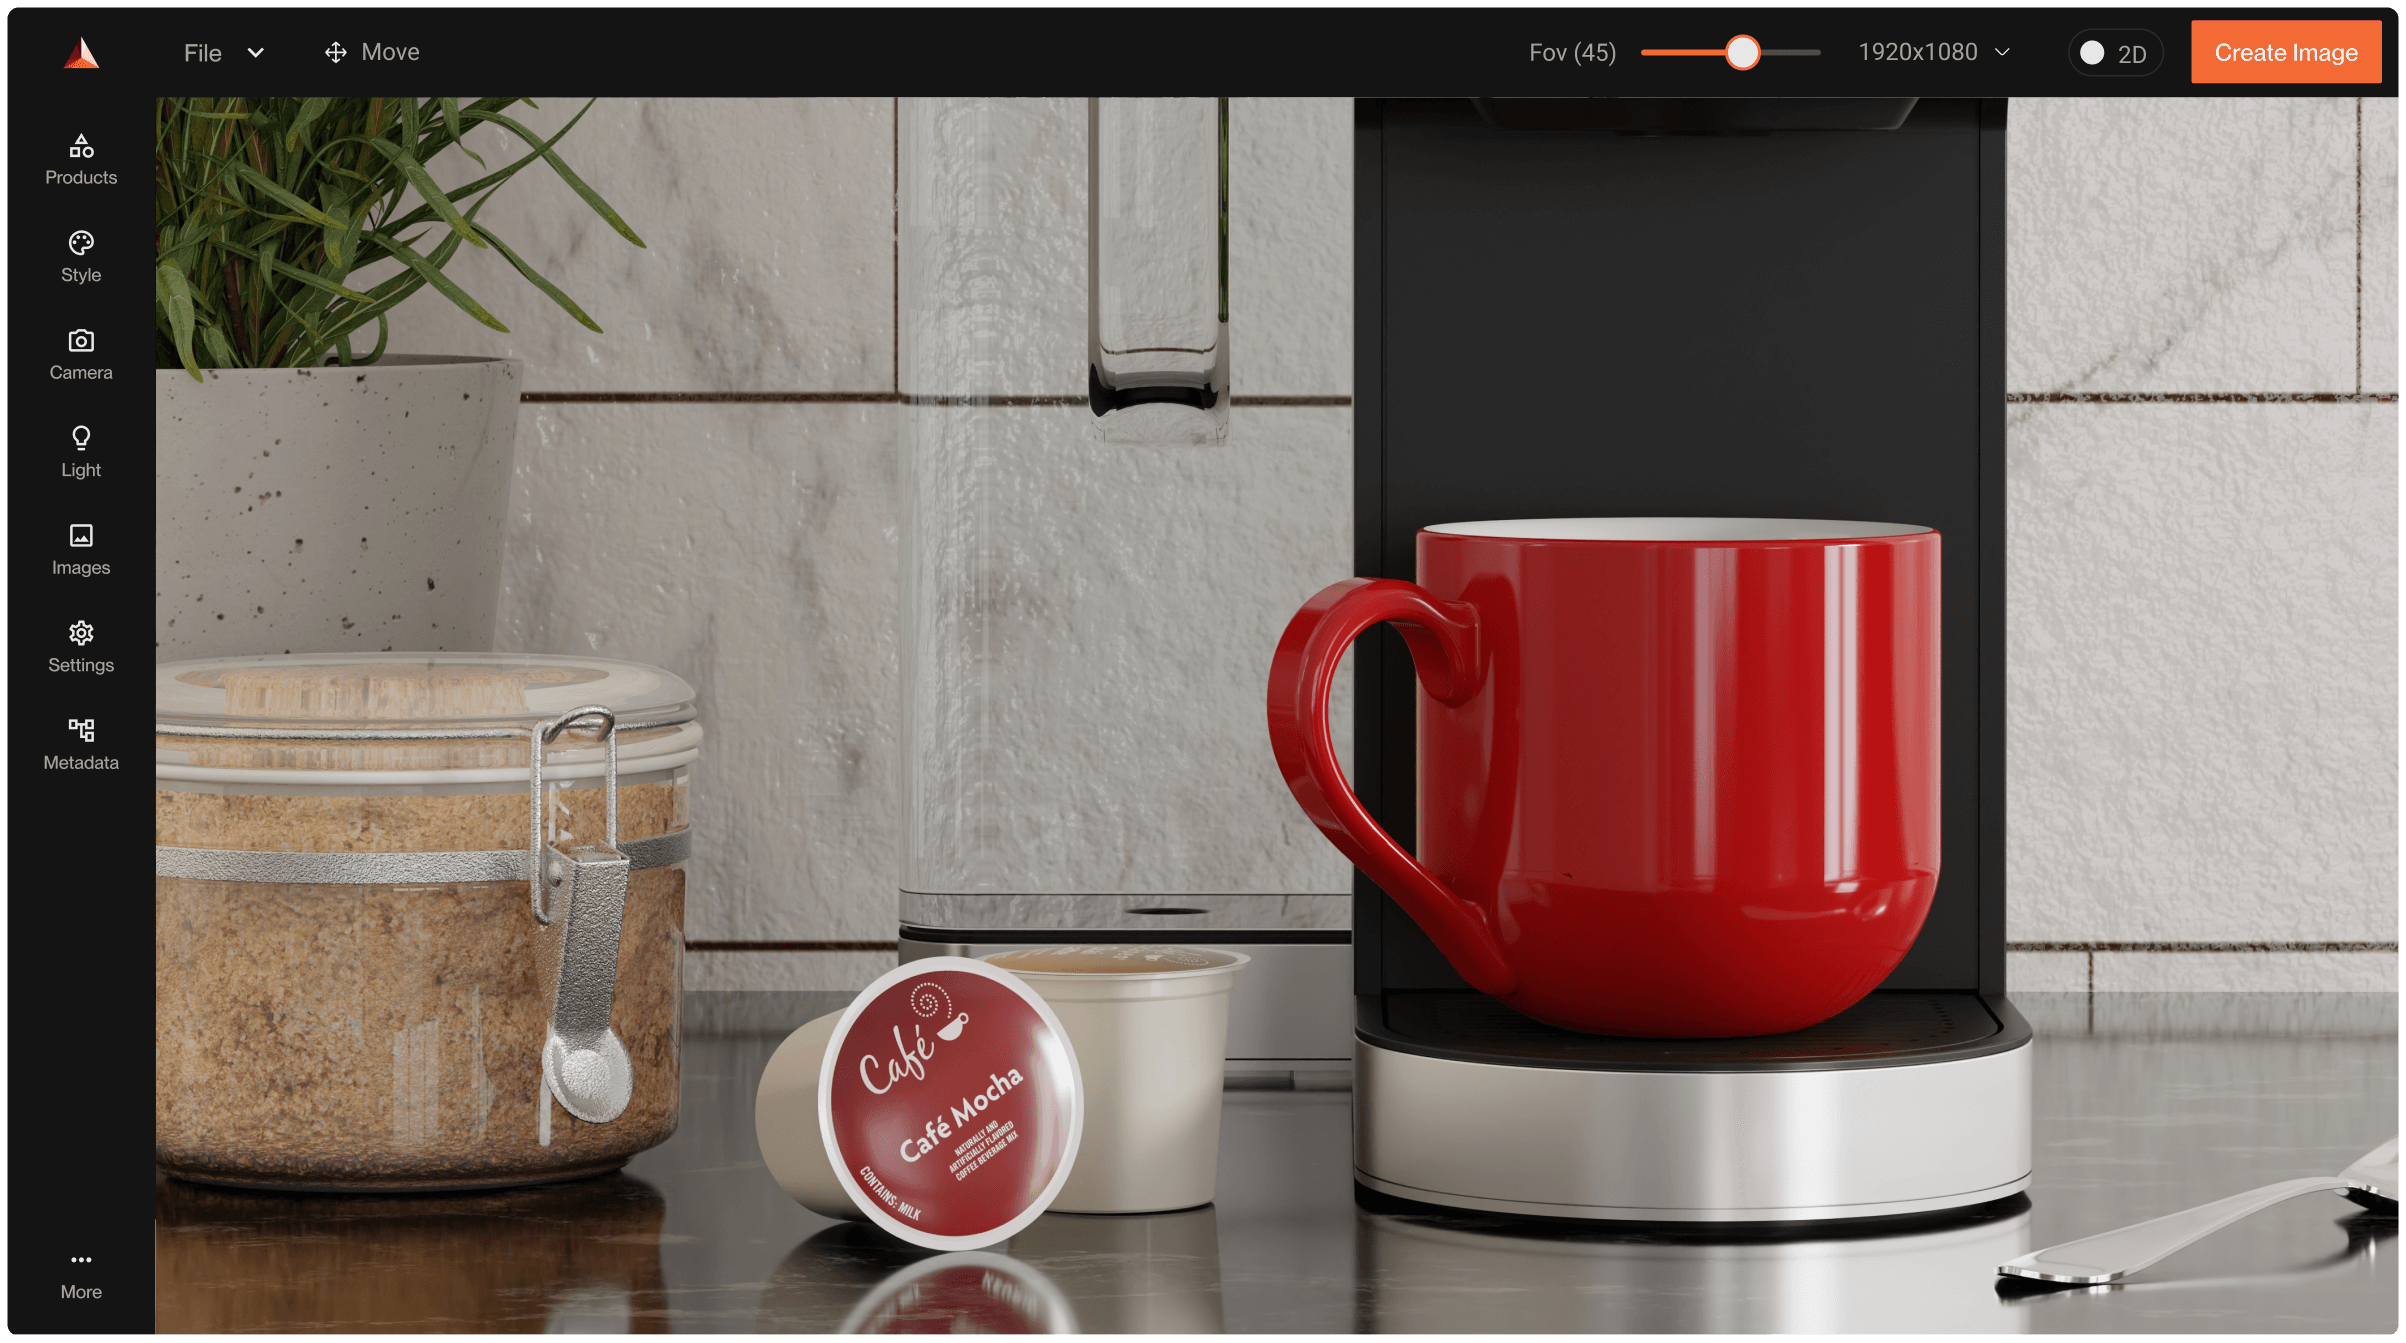 coffee pods coffee maker mug kitchen 3D pack shot